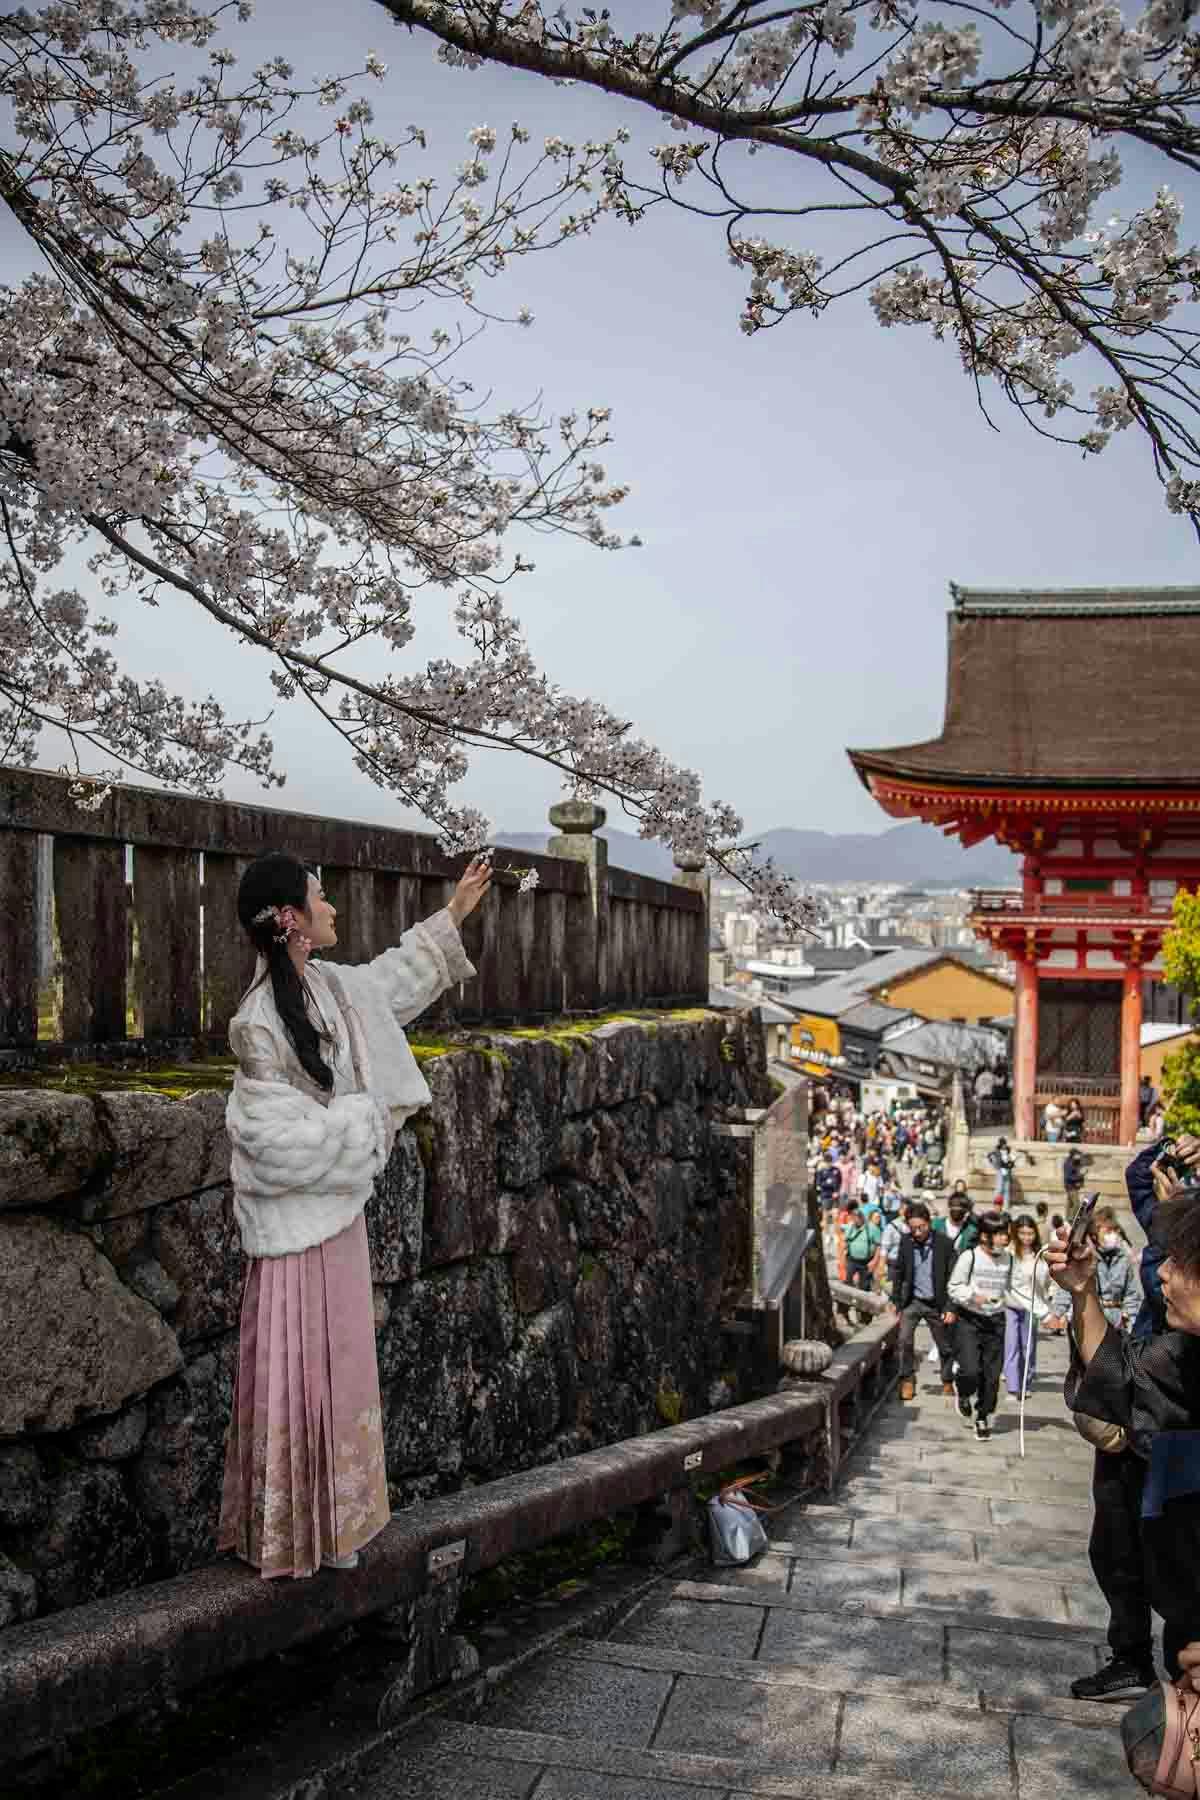 This tourist is behaving badly to get her perfect sakura shot. Photo source: James Saunders-Wyndham